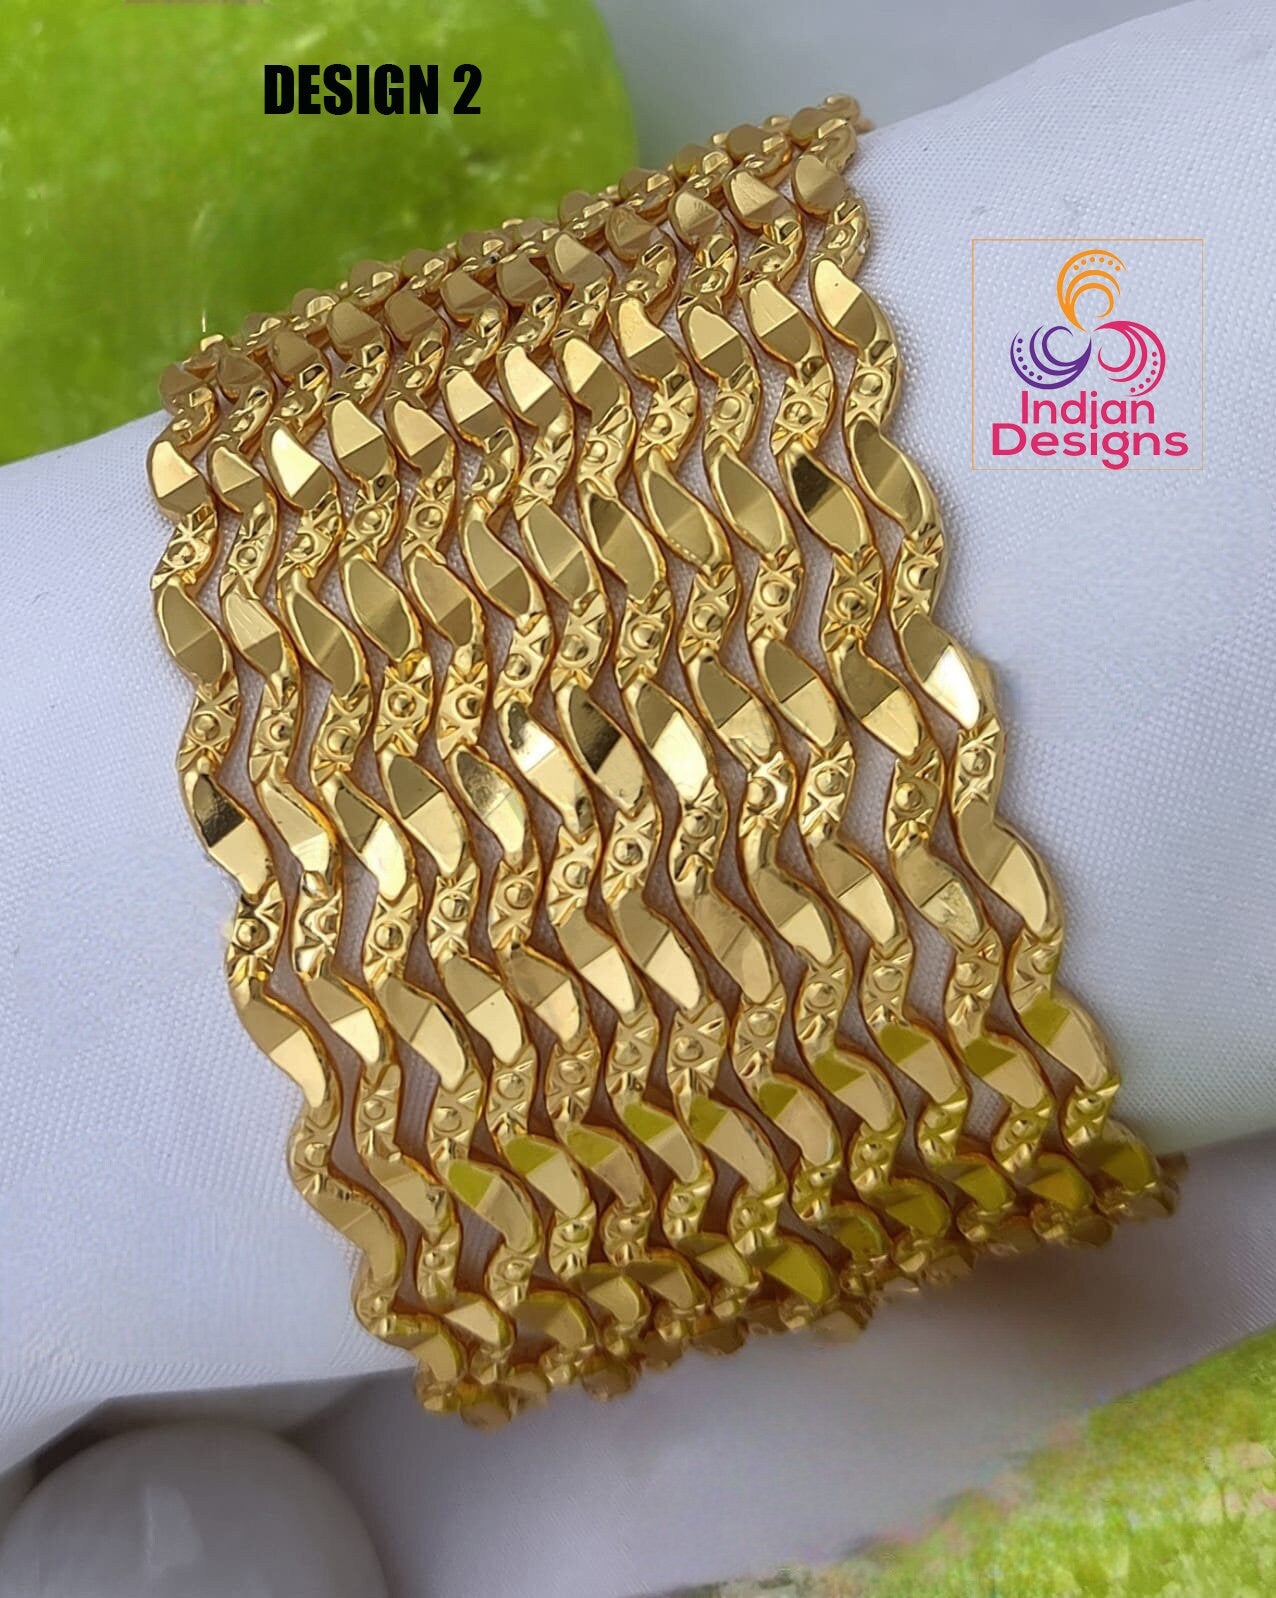 Wholesale CZ Gemstone Silver Bracelet, 925 Sterling Silver Indian Jewelry  Excellent Cz Bracelet Cz Silver Bracelets at Rs 4631.00 | खरे चांदी का कंगन  - Art Palace, Jaipur | ID: 2851921711991